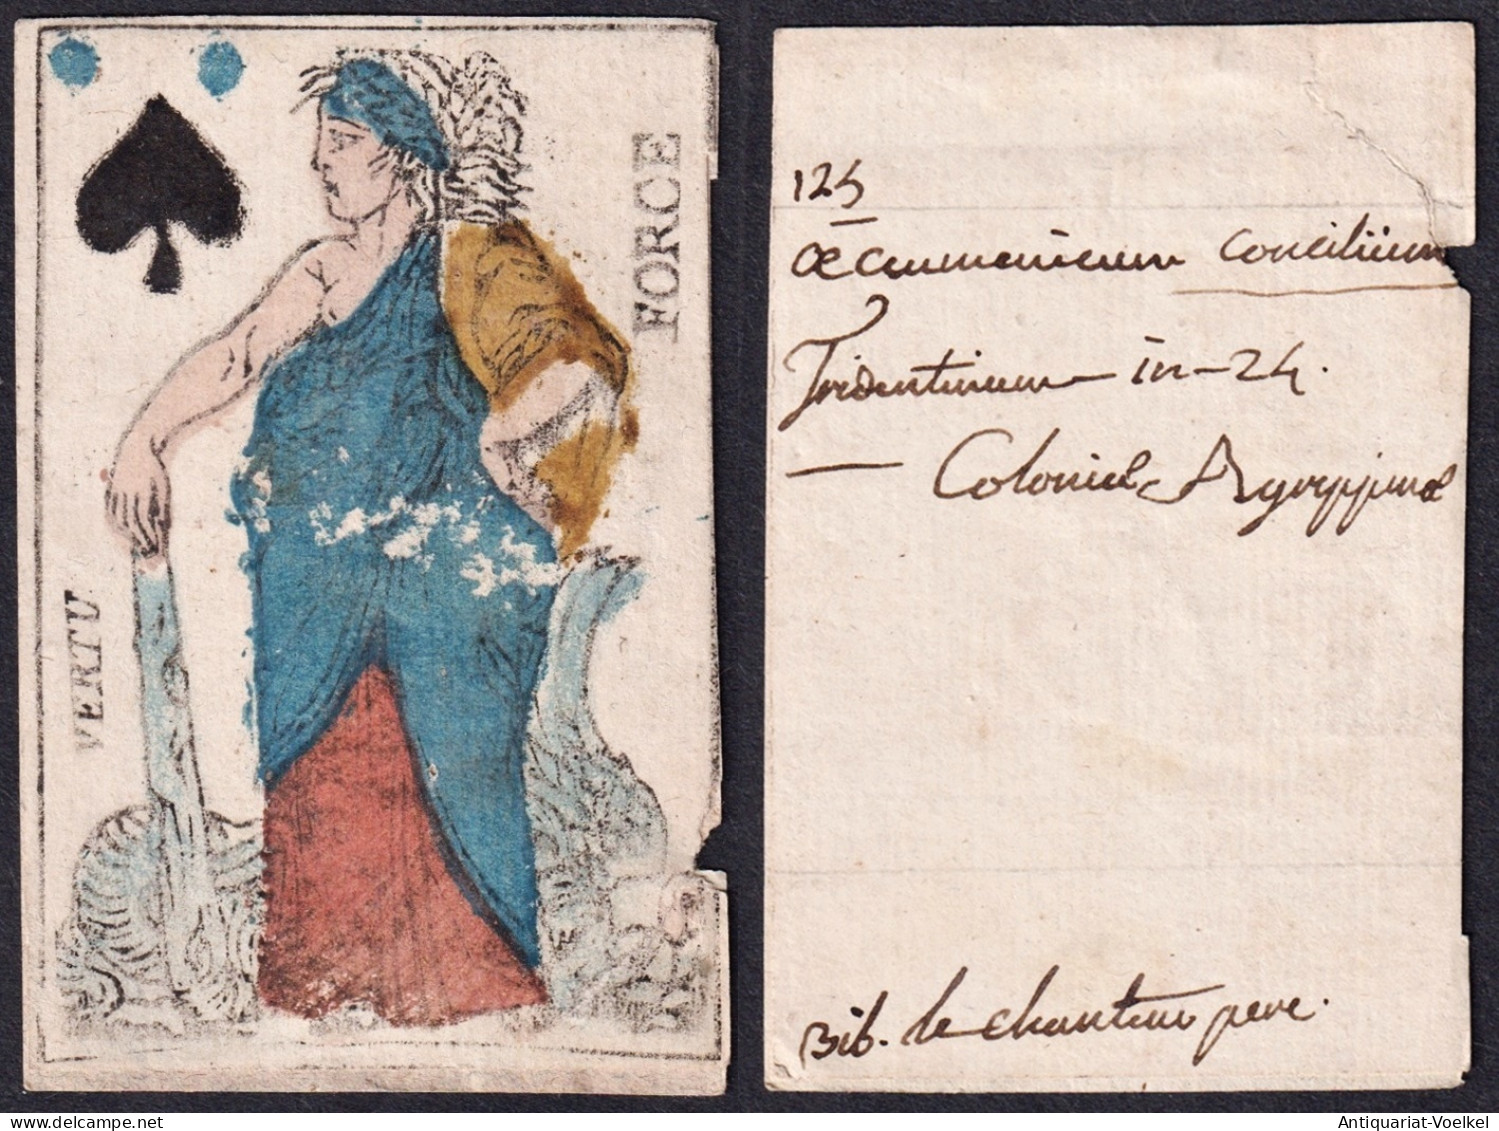 (Pik-Dame) - Queen Of Spades / Reine De Pique / Playing Card Carte A Jouer Spielkarte Cards Cartes - Giocattoli Antichi